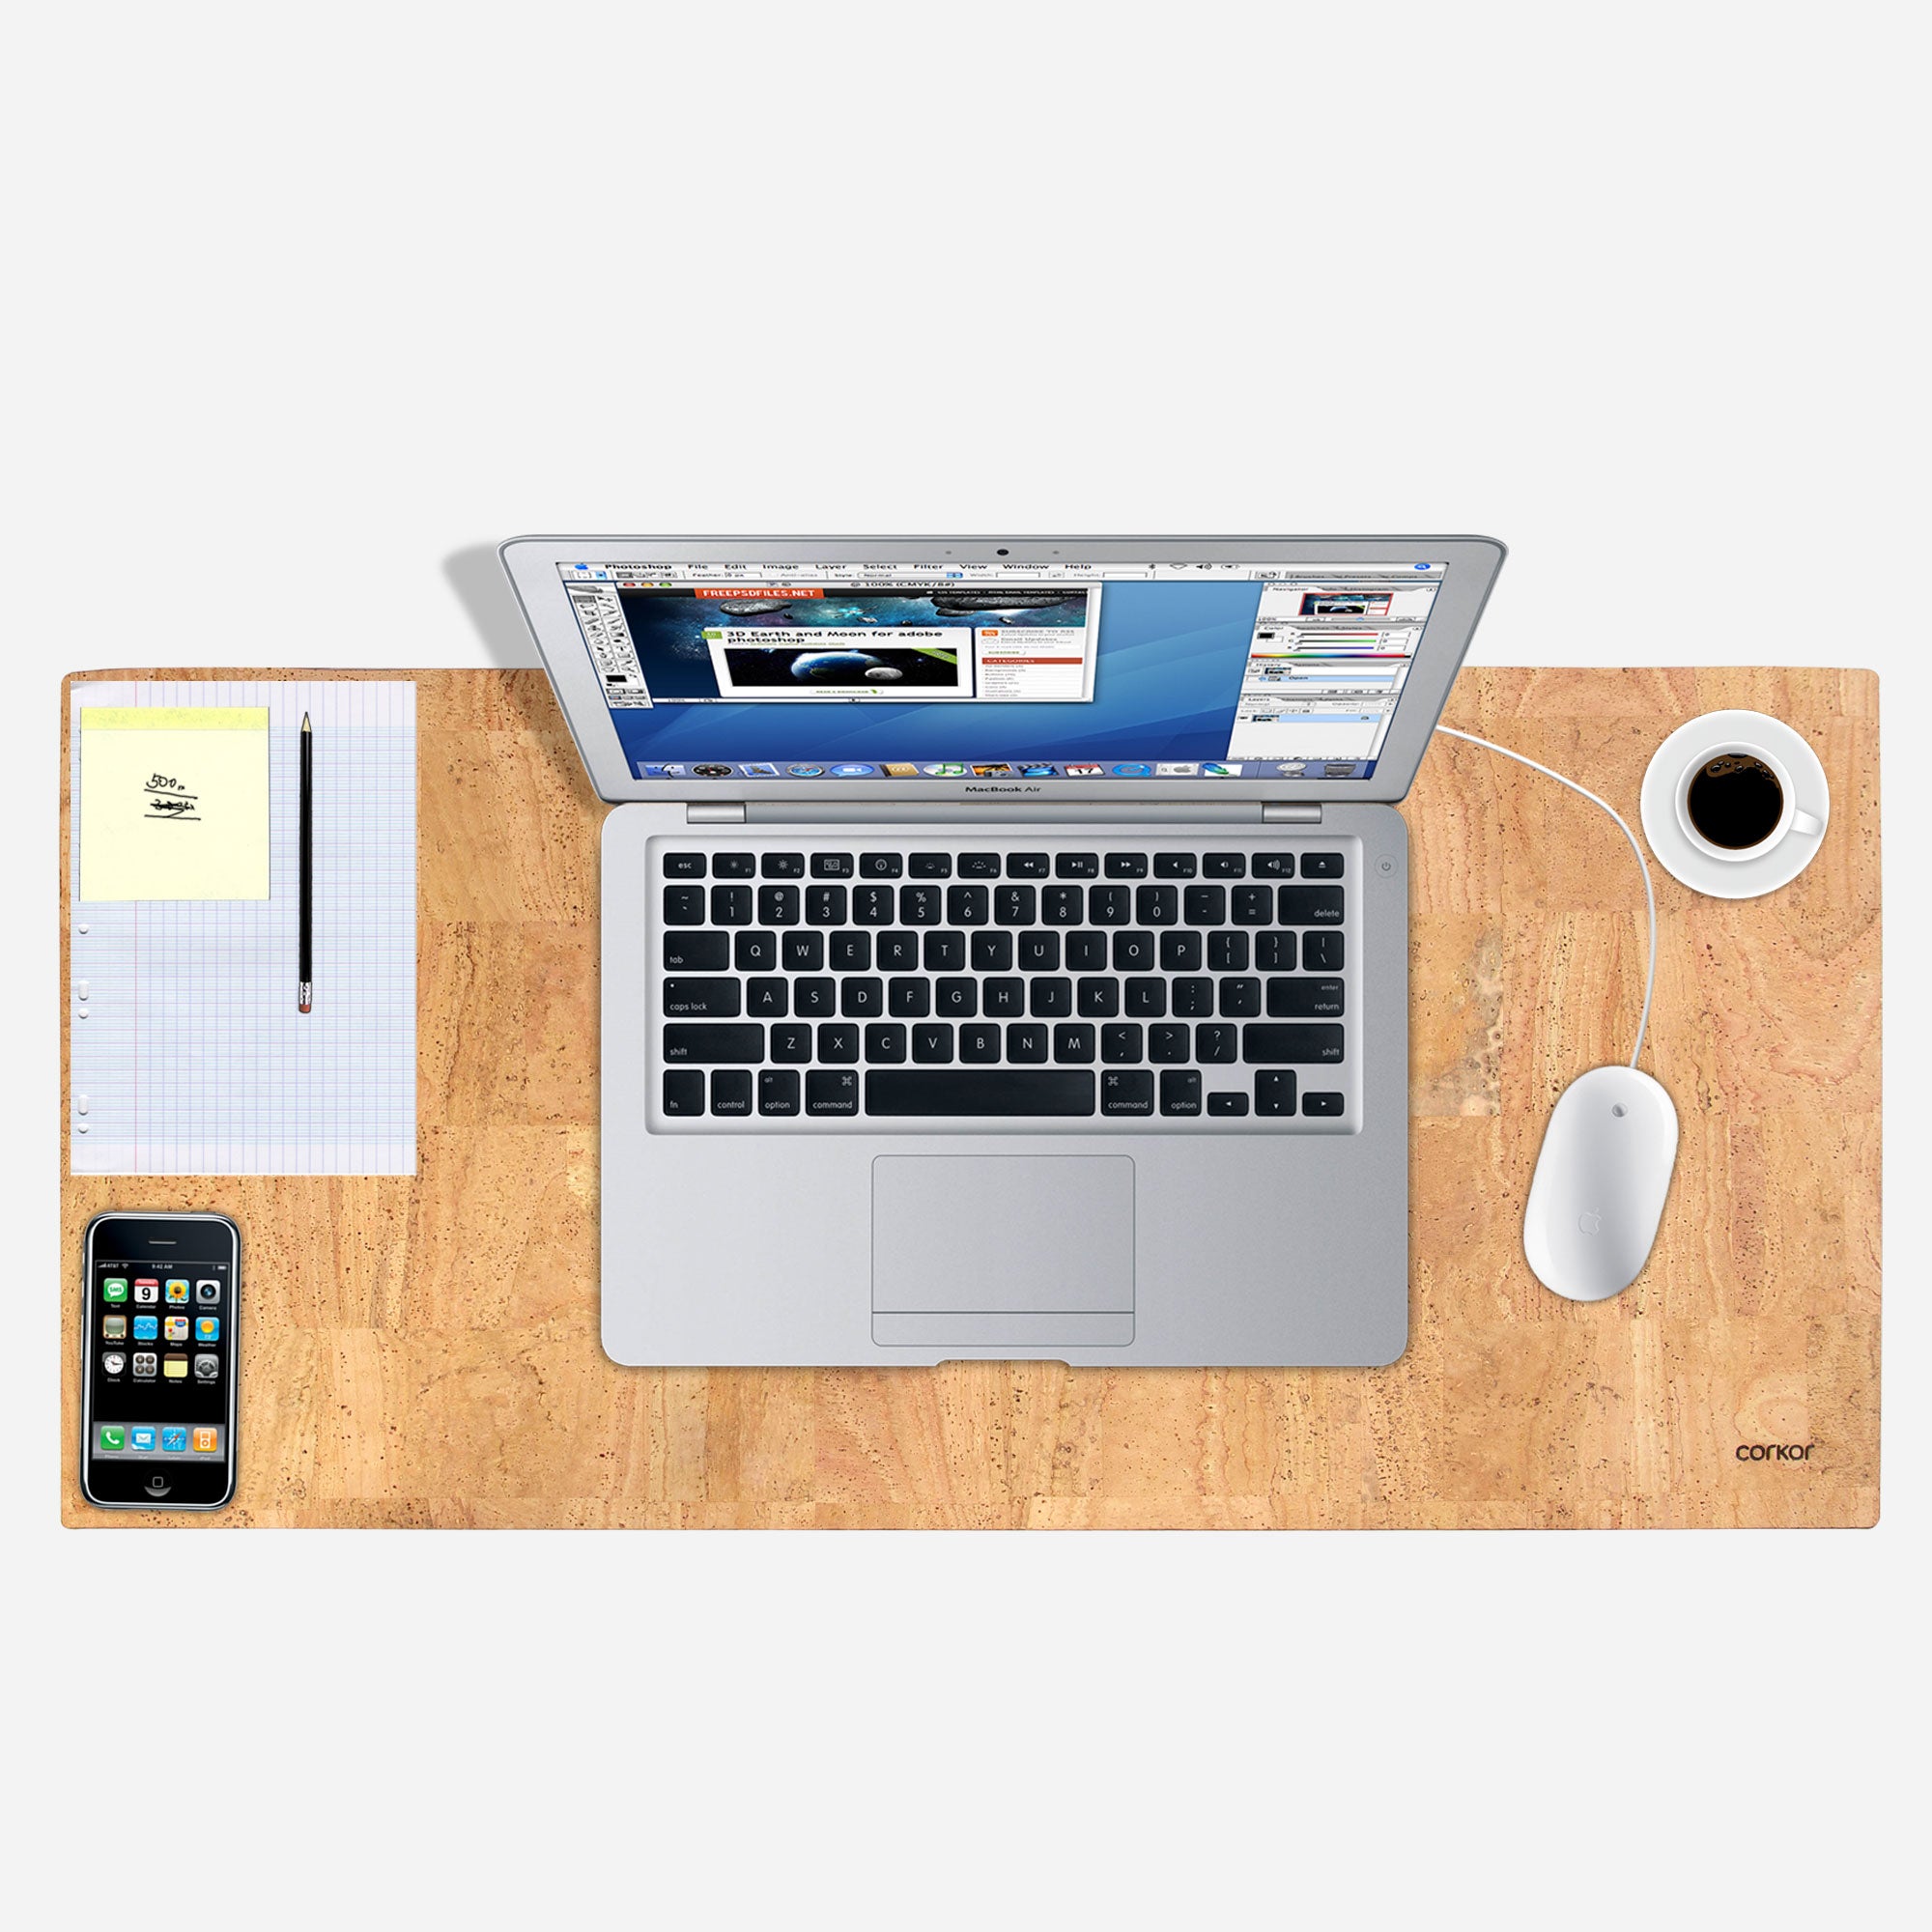 KINGFOM Desk Pad Office Desktop Protecter, Waterproof PU Leather Large Mous 